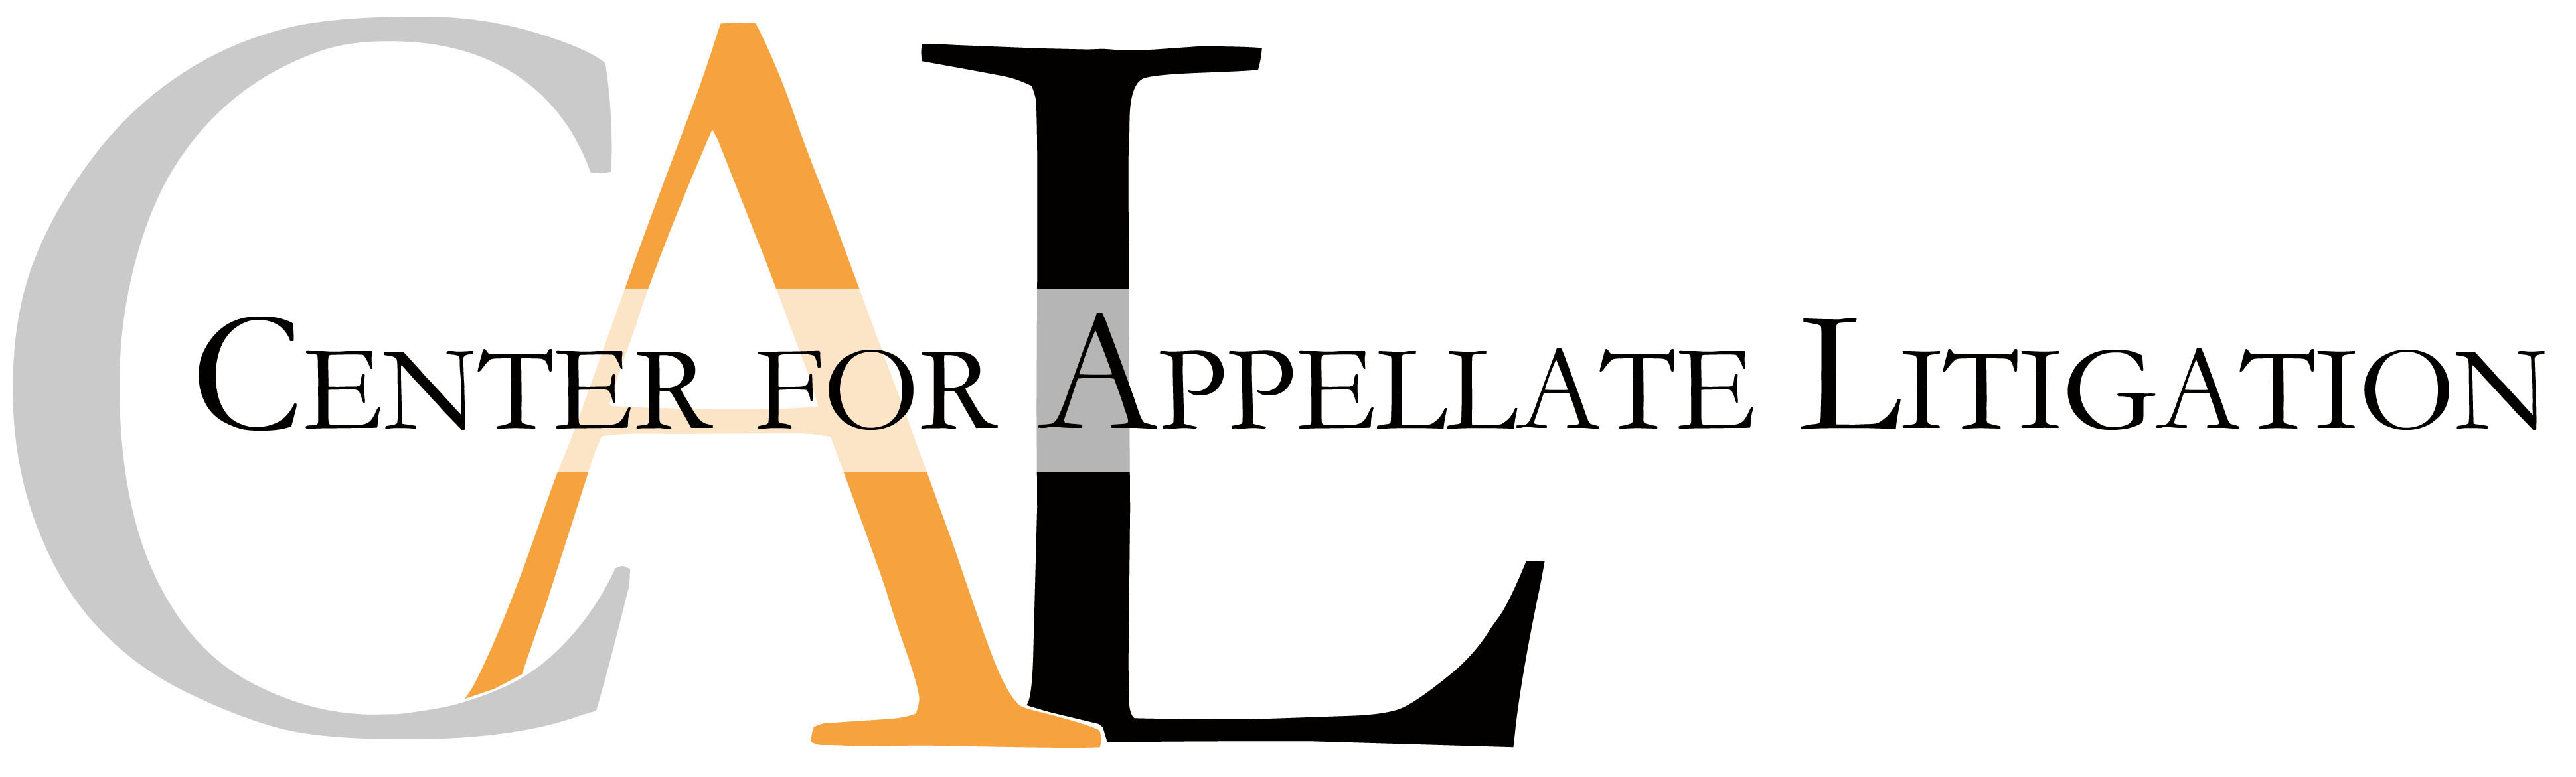 Center for Appellate Litigation logo